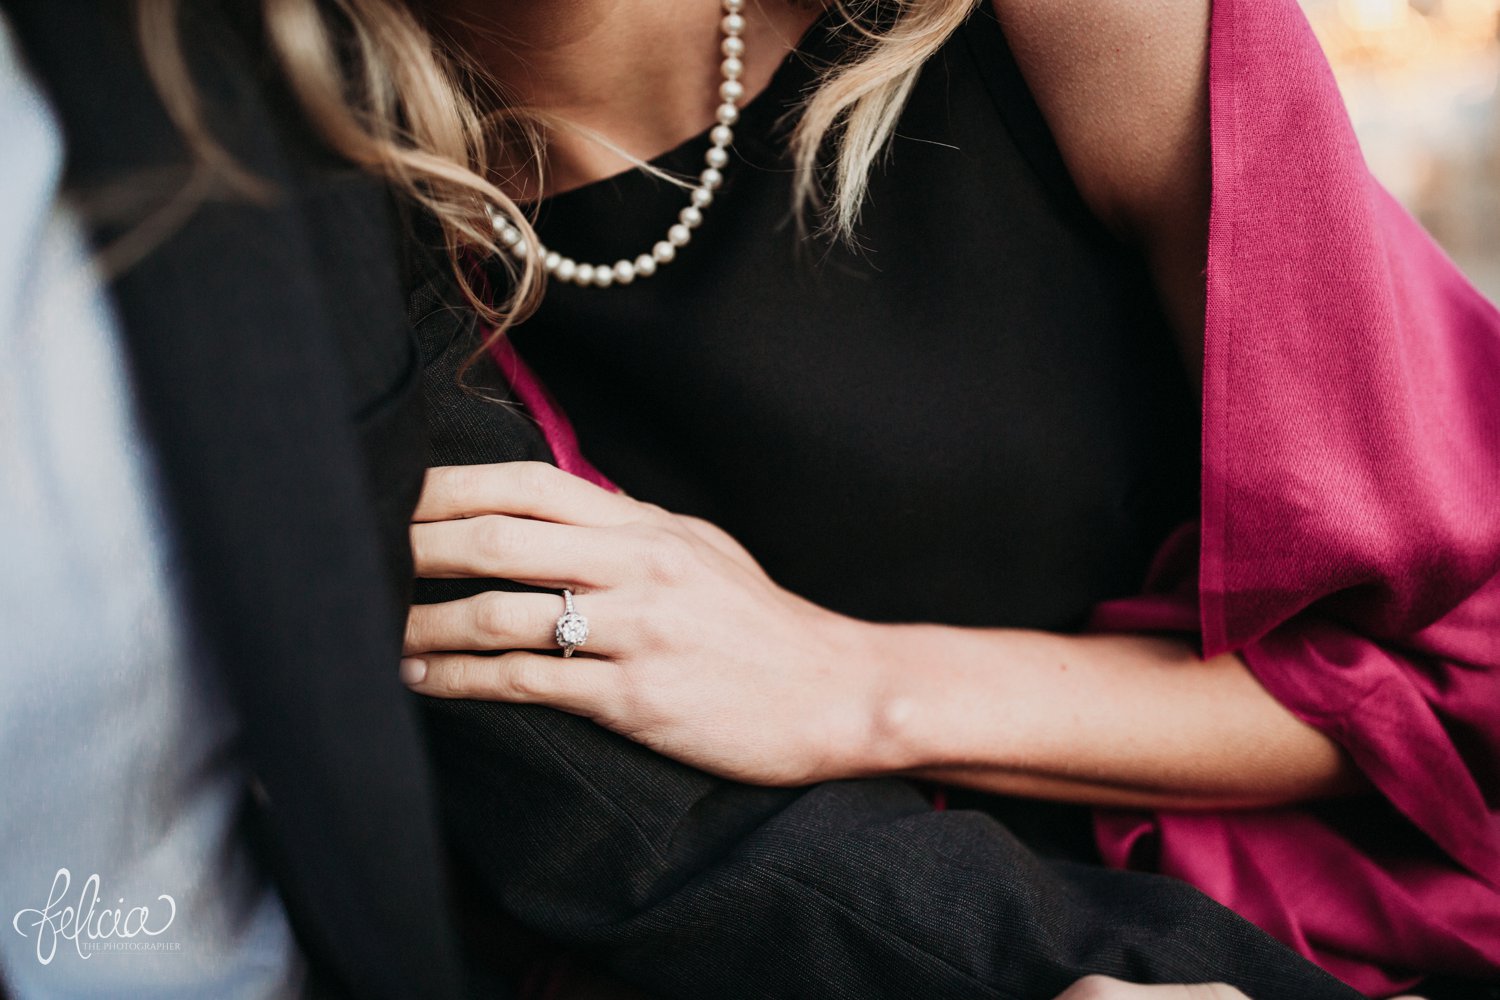 images by feliciathephotographer.com | destination wedding photographer | engagement | new york city | brooklyn bridge | skyline | formal | classic | true love | romantic | cuddles | pink shawl | pearls | diamond ring | little black dress | 